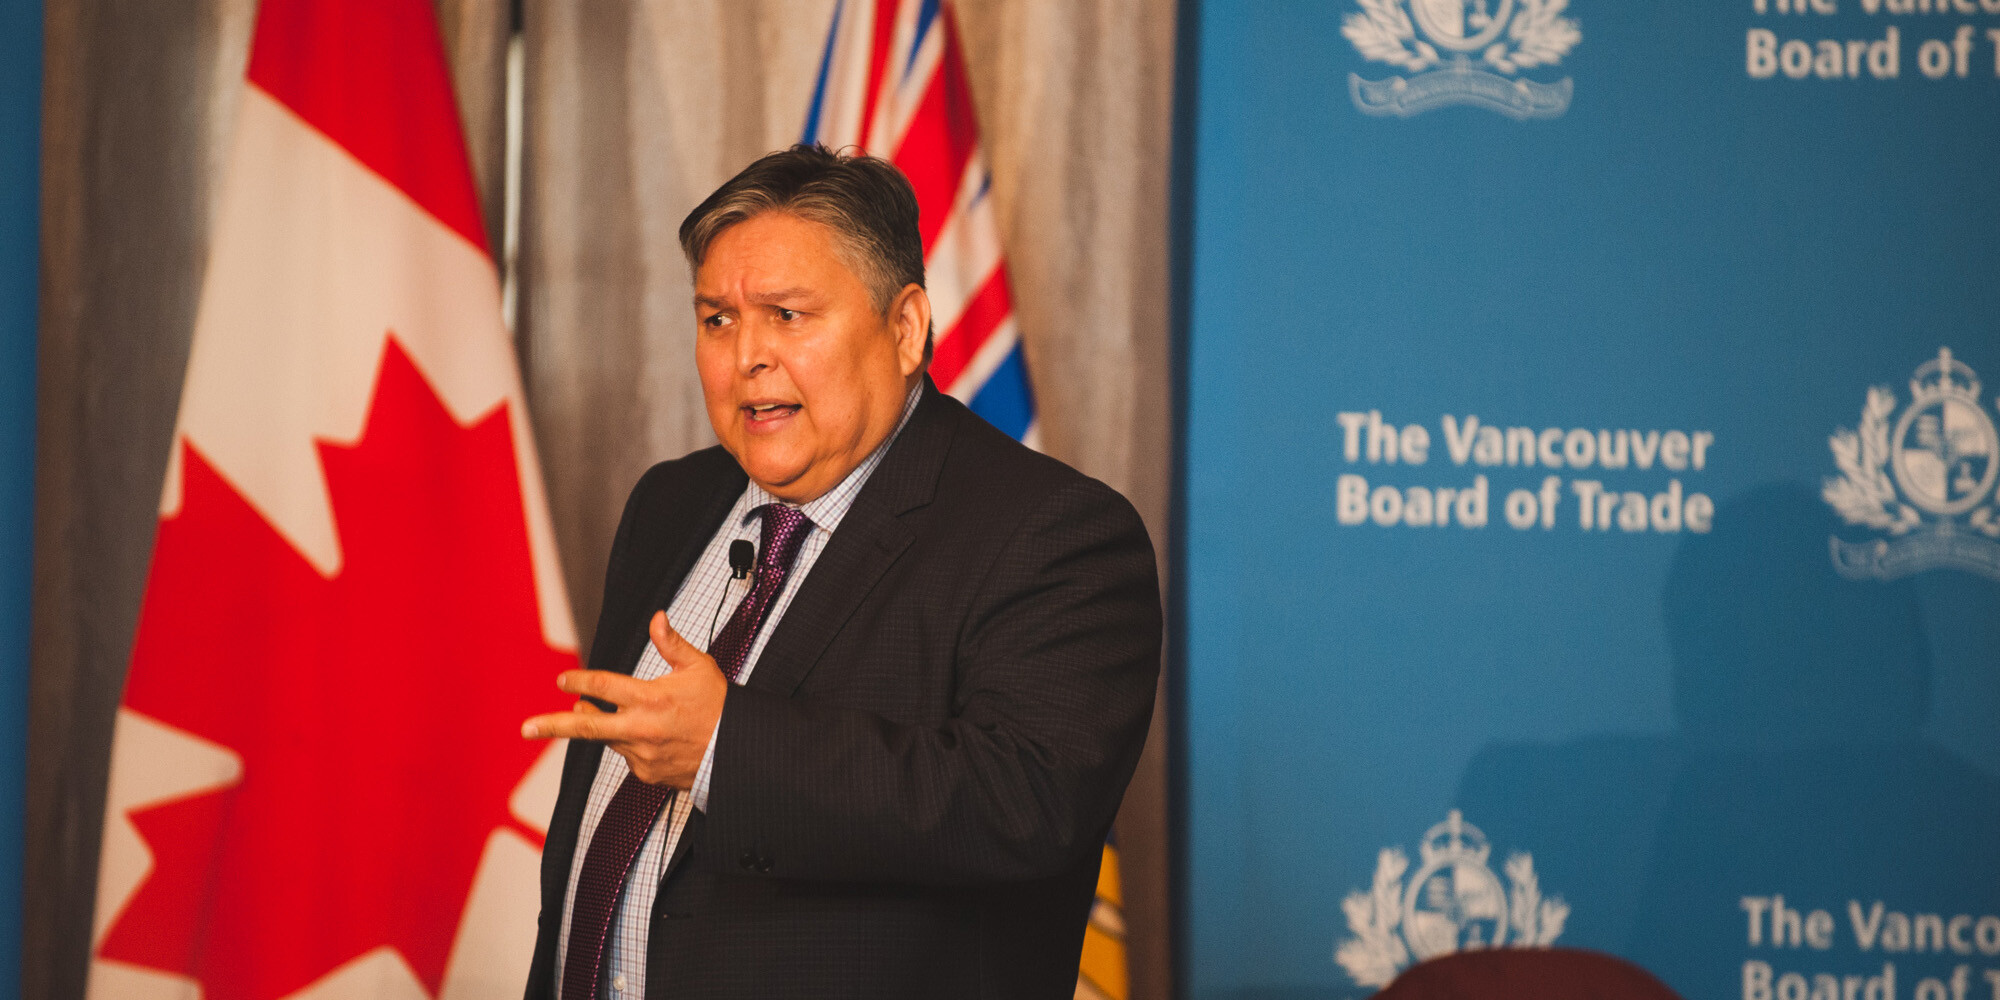 Vancouver Board of Trade Intercultural Presentation by Bob Joseph